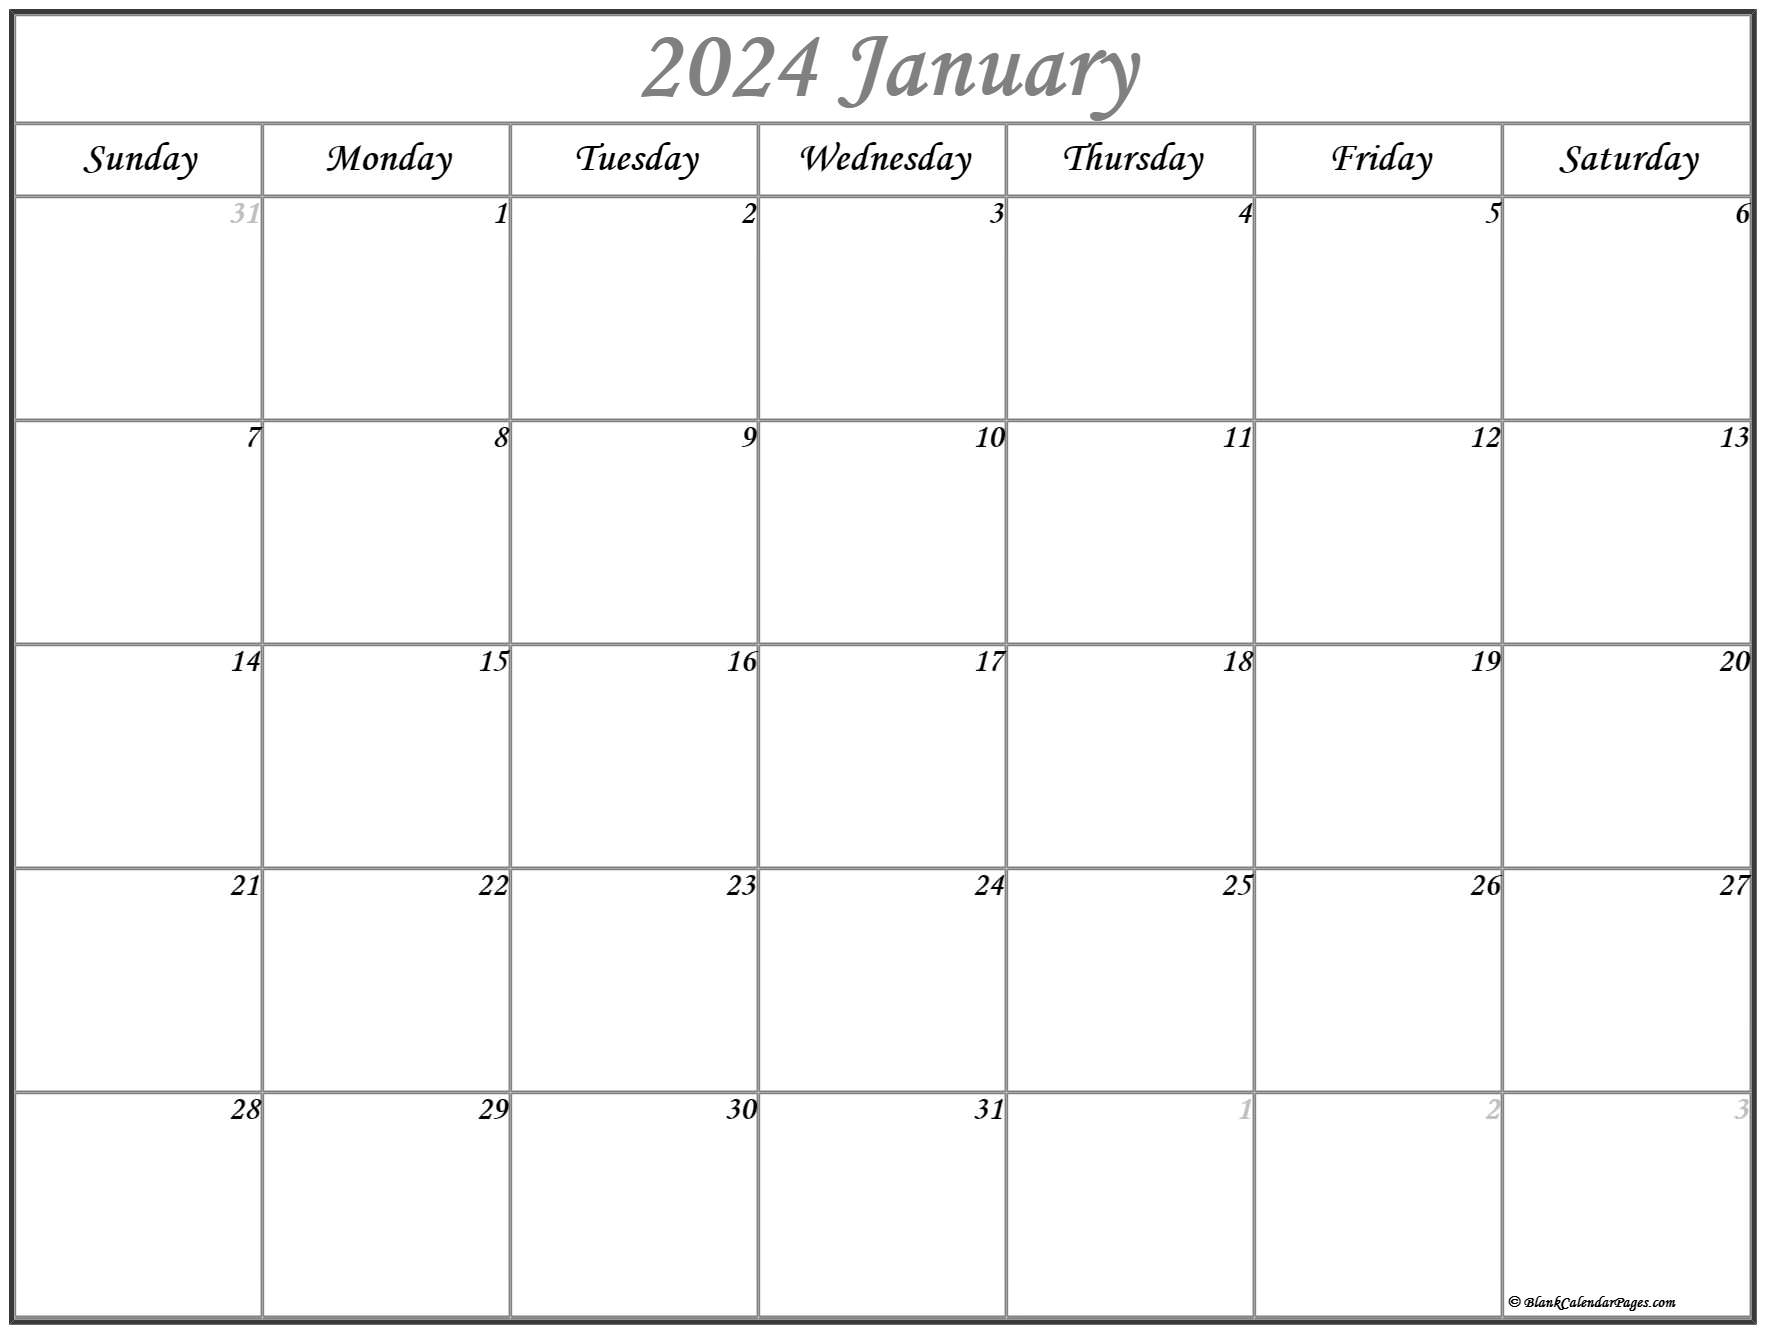 2024 Monthly Calendar Pdf Free Printable Templates 2024 Monthly - Free Printable 2024 Monthly Calendar With Weekly Planner